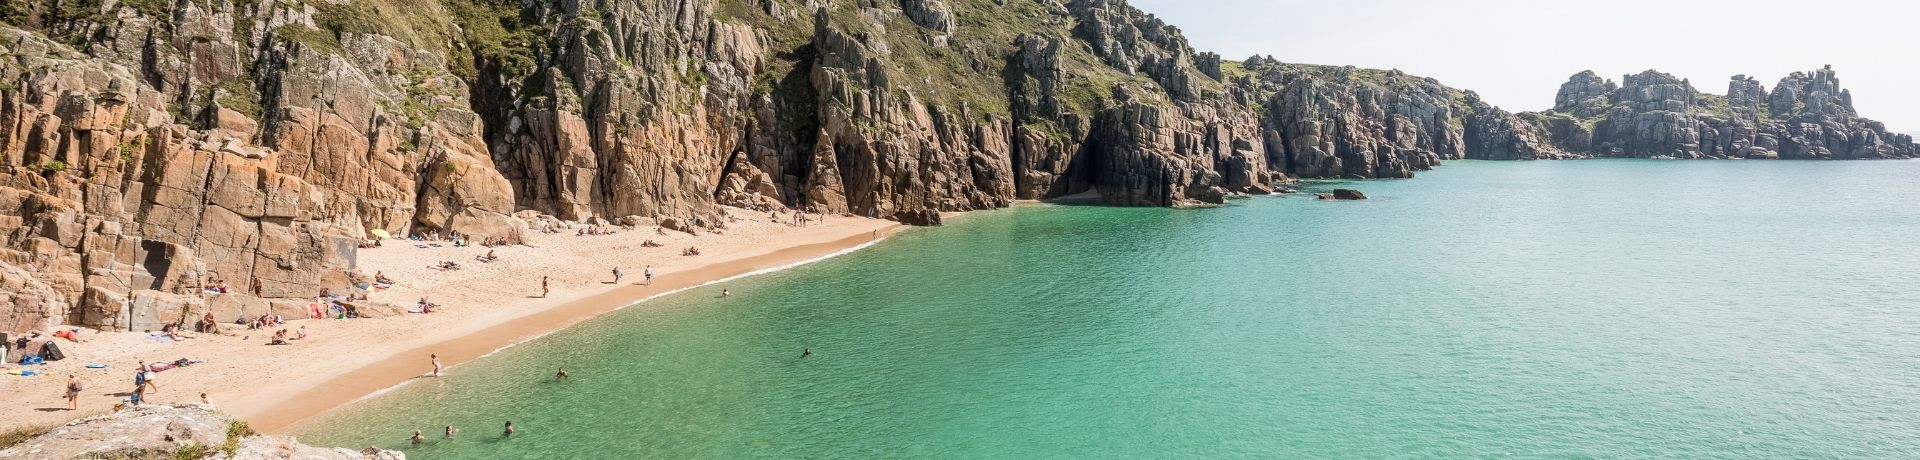 Beaches in Cornwall